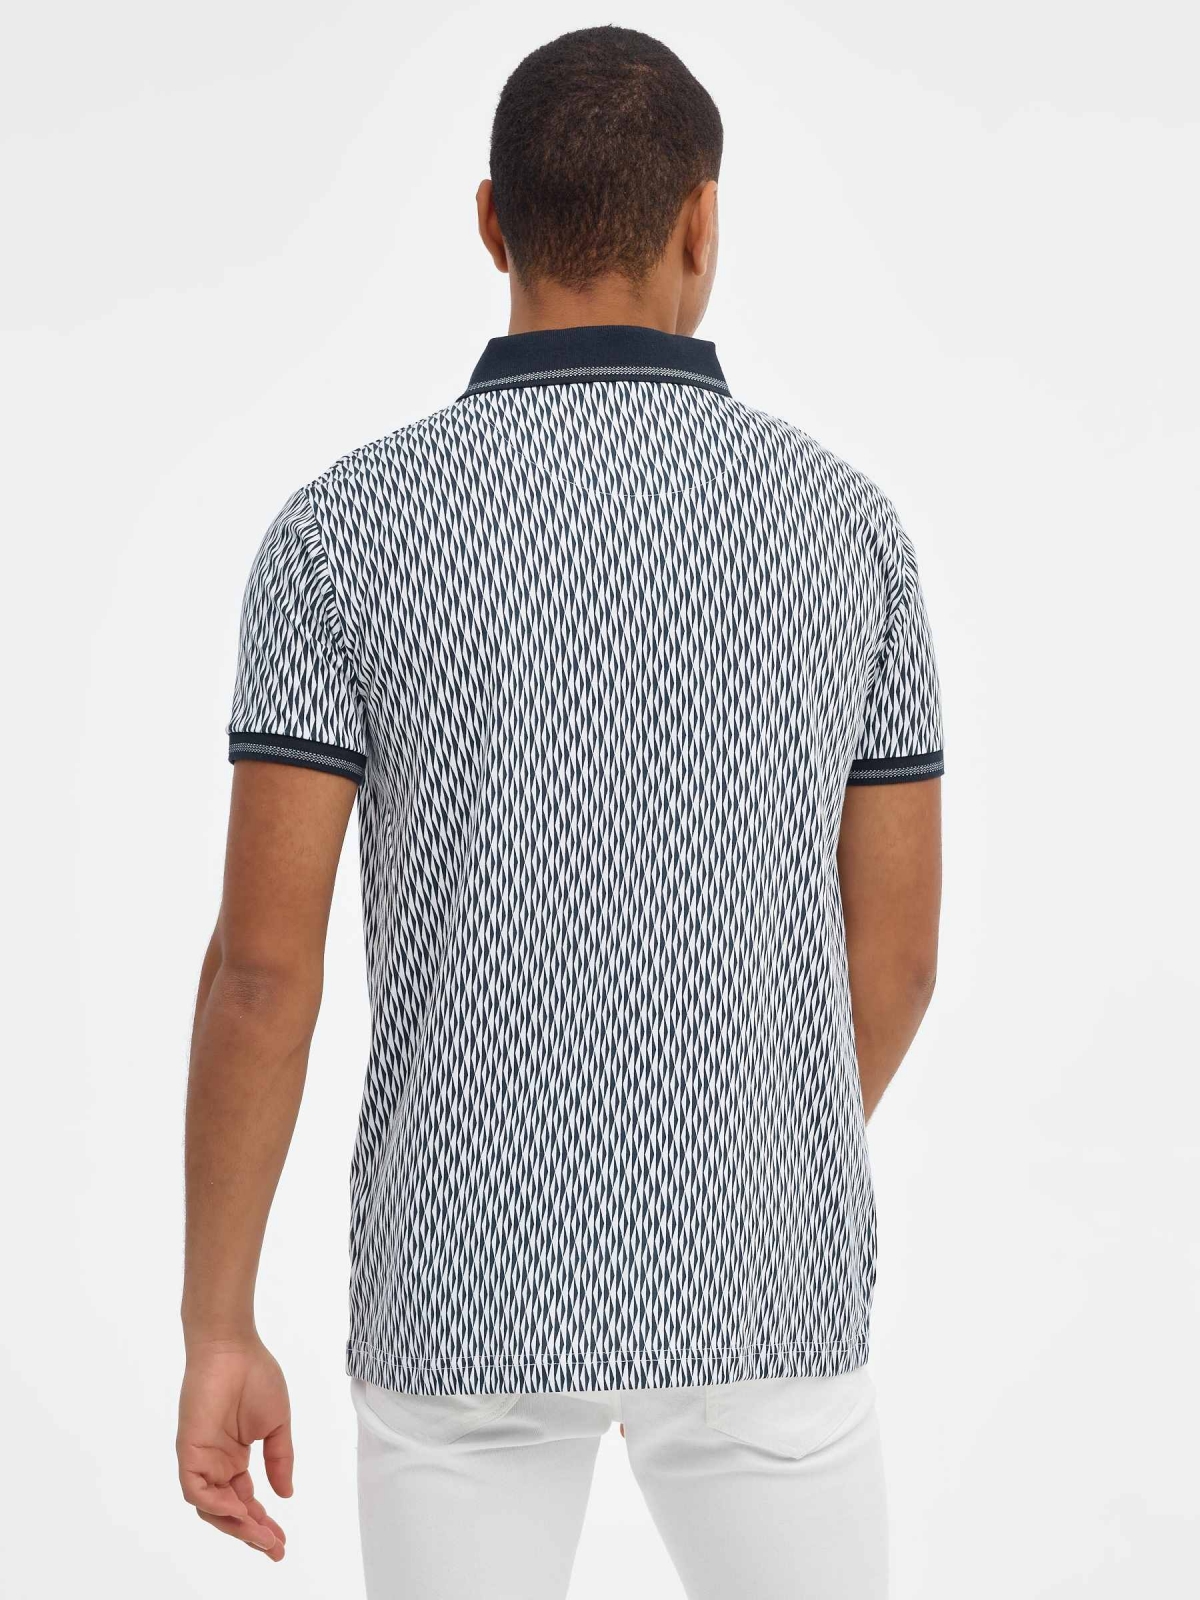 Geometric print polo shirt navy middle back view